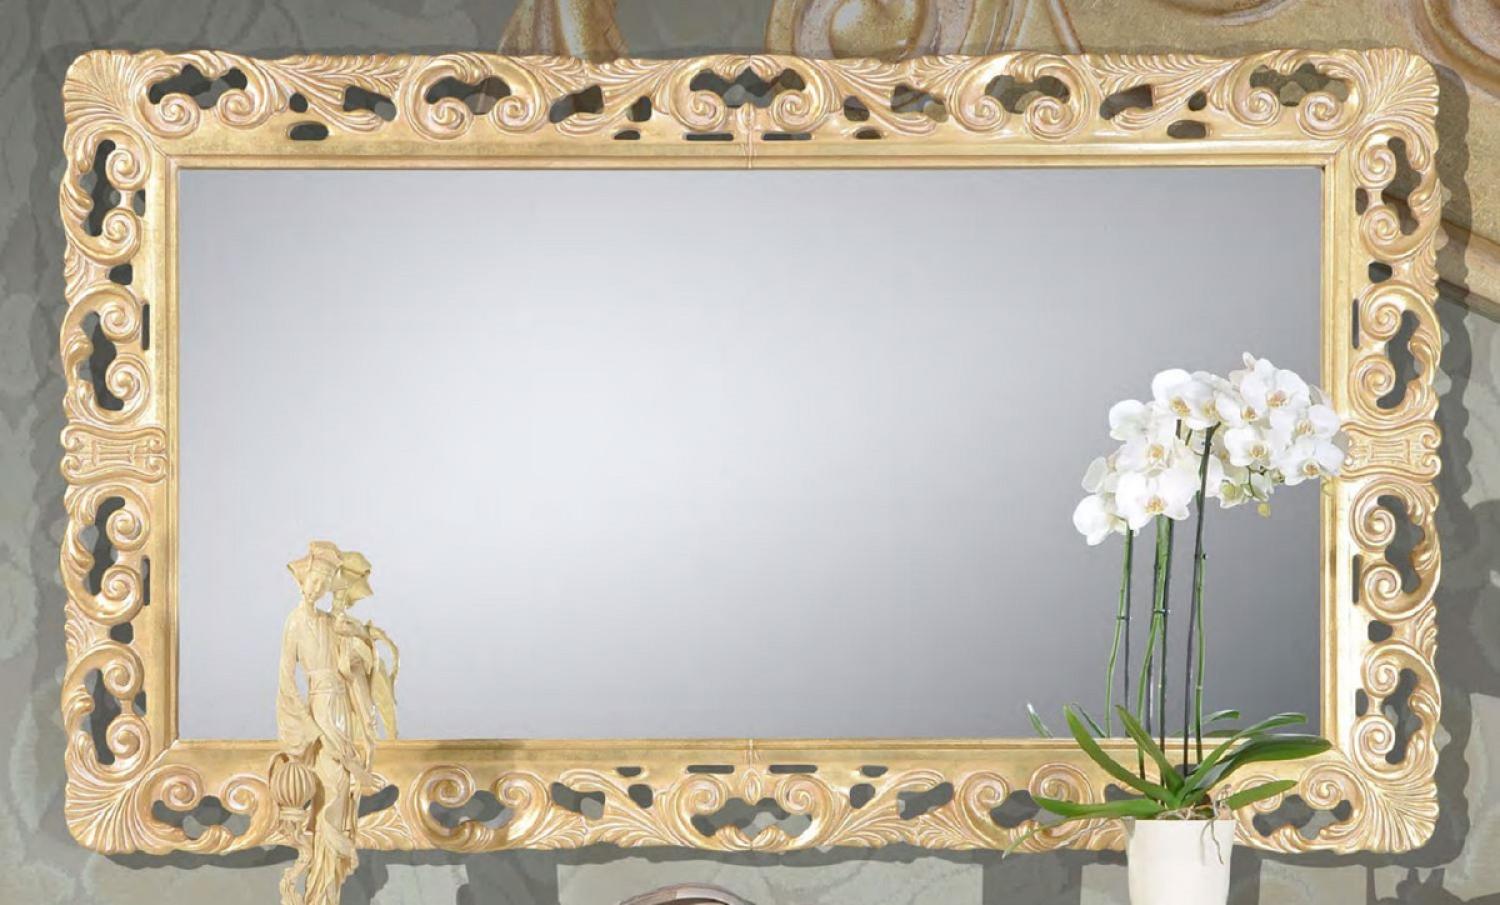 Casa Padrino Luxus Barock Spiegel Gold - Rechteckiger Massivholz Wandspiegel im Barockstil - Prunkvolle Barock Möbel - Luxus Qualität - Made in Italy Bild 1